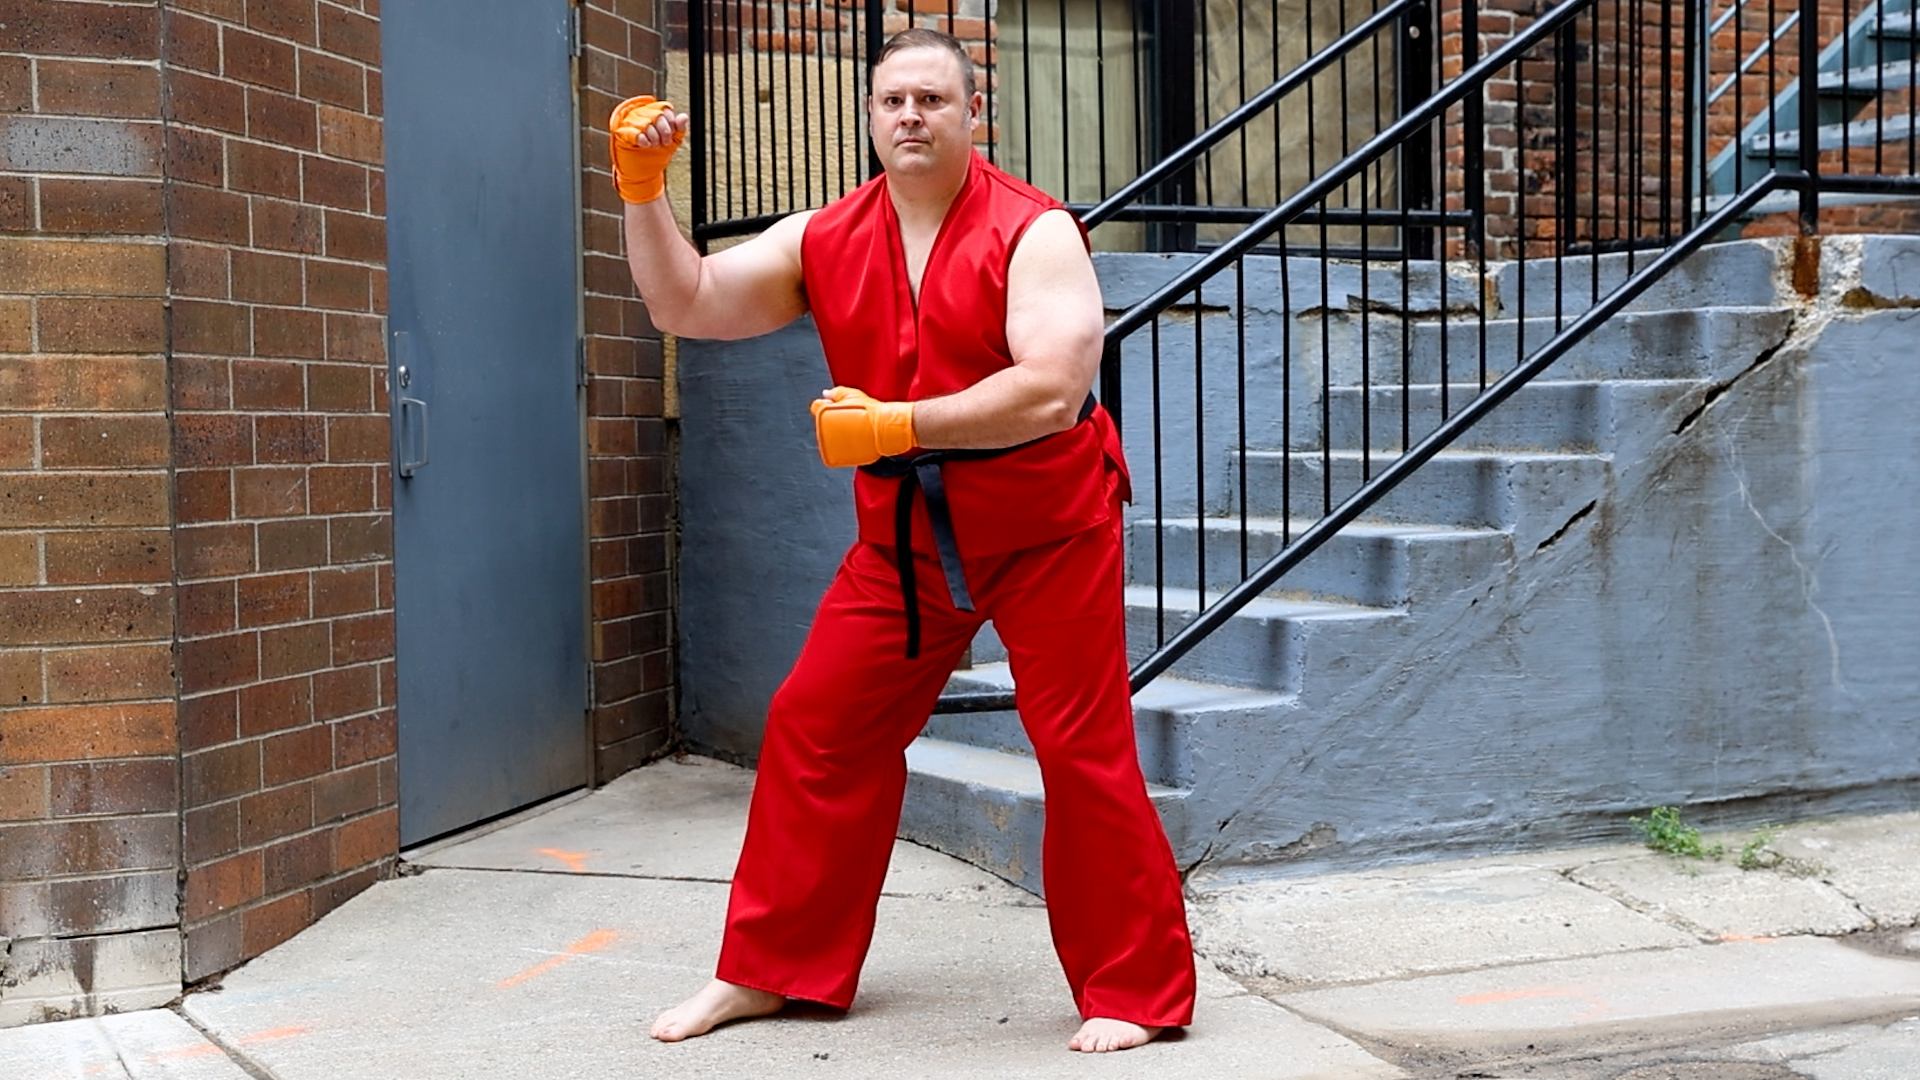 Plus Size Street Fighter Ken Costume for Men